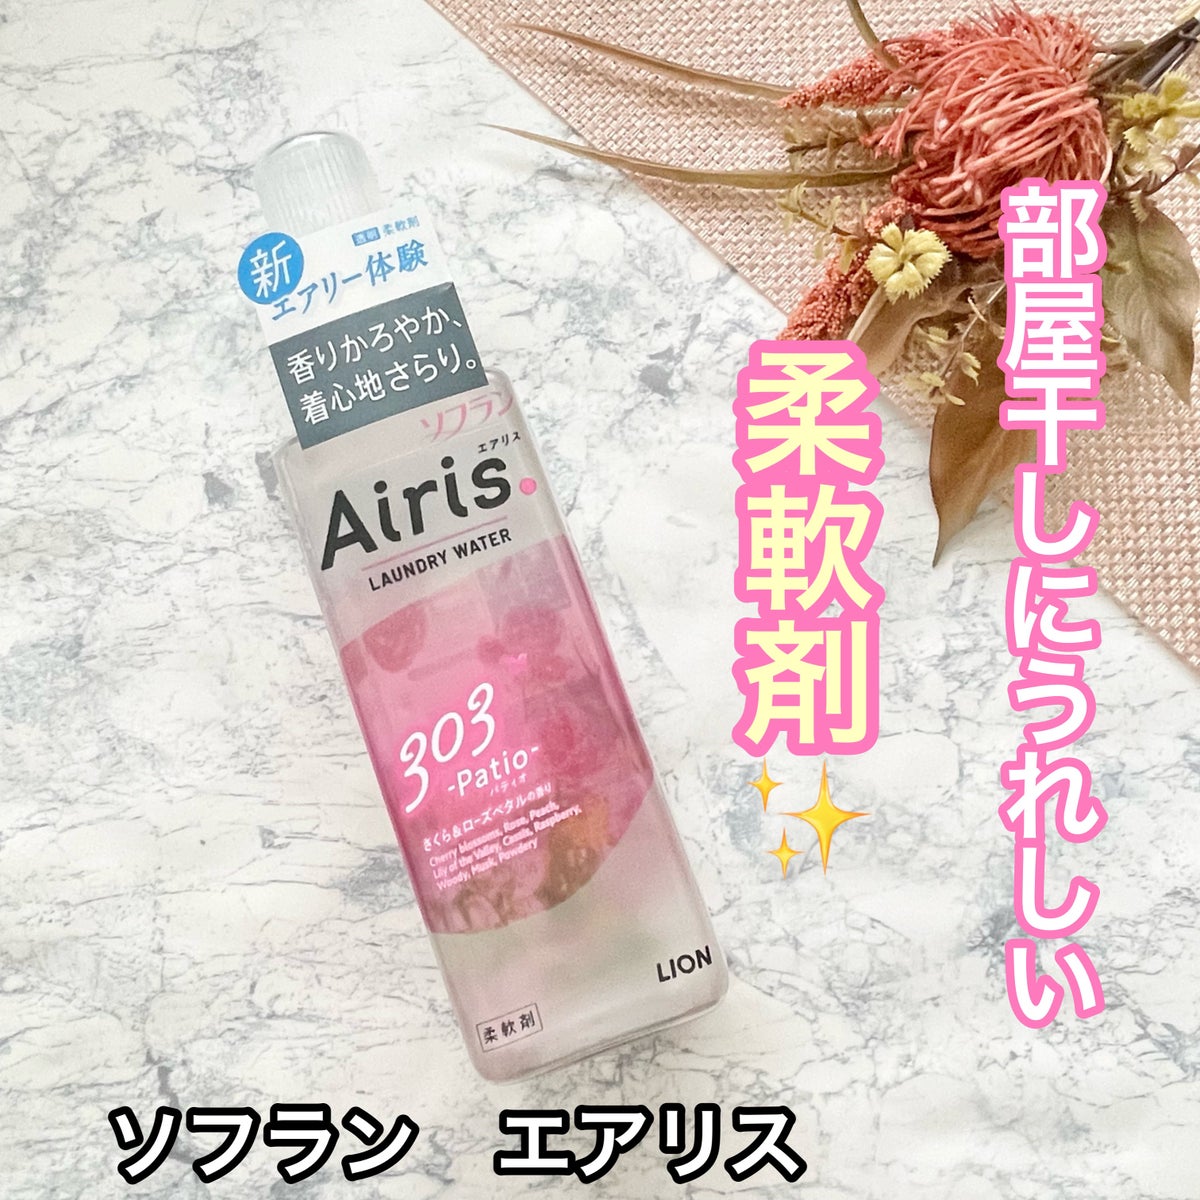 Airis(エアリス) 303 パティオ/ソフラン/柔軟剤 by ibuharumaman